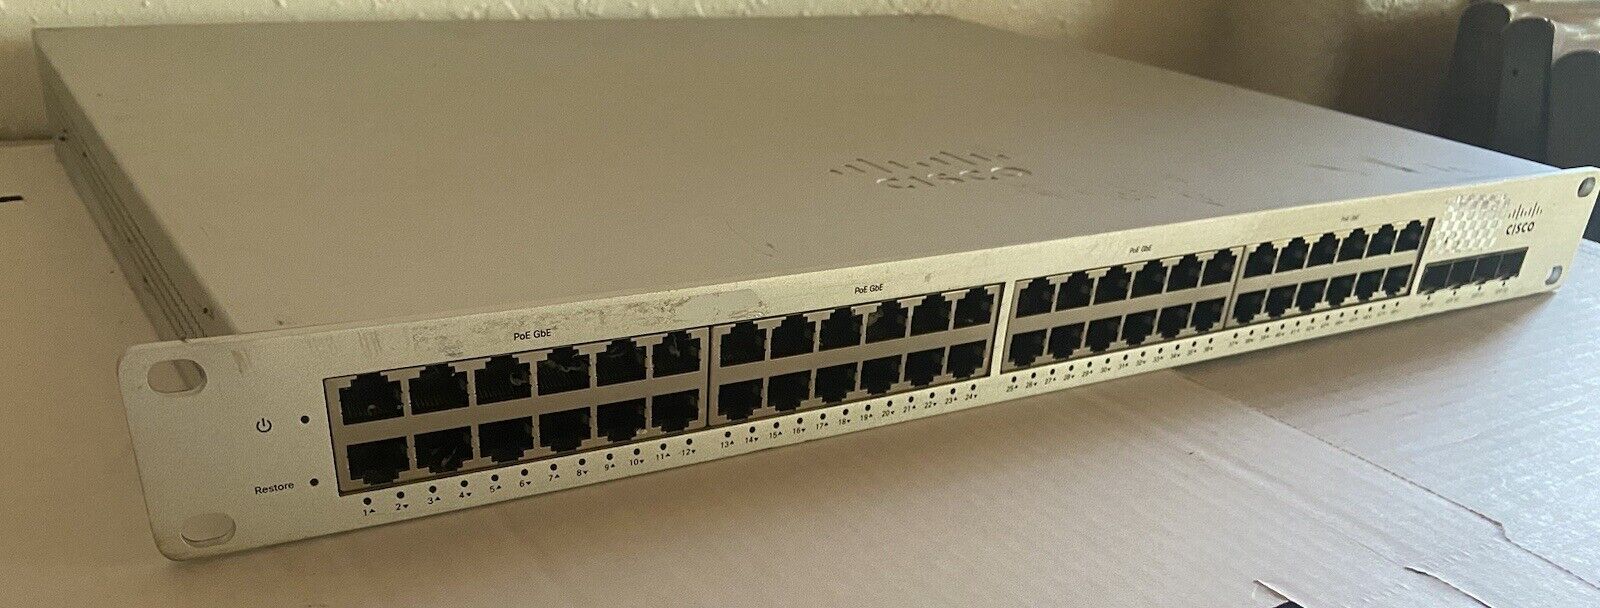 Cisco Meraki MS220-48LP 48-Port PoE+ Gigabit Cloud Managed Switch - UNCLAIMED